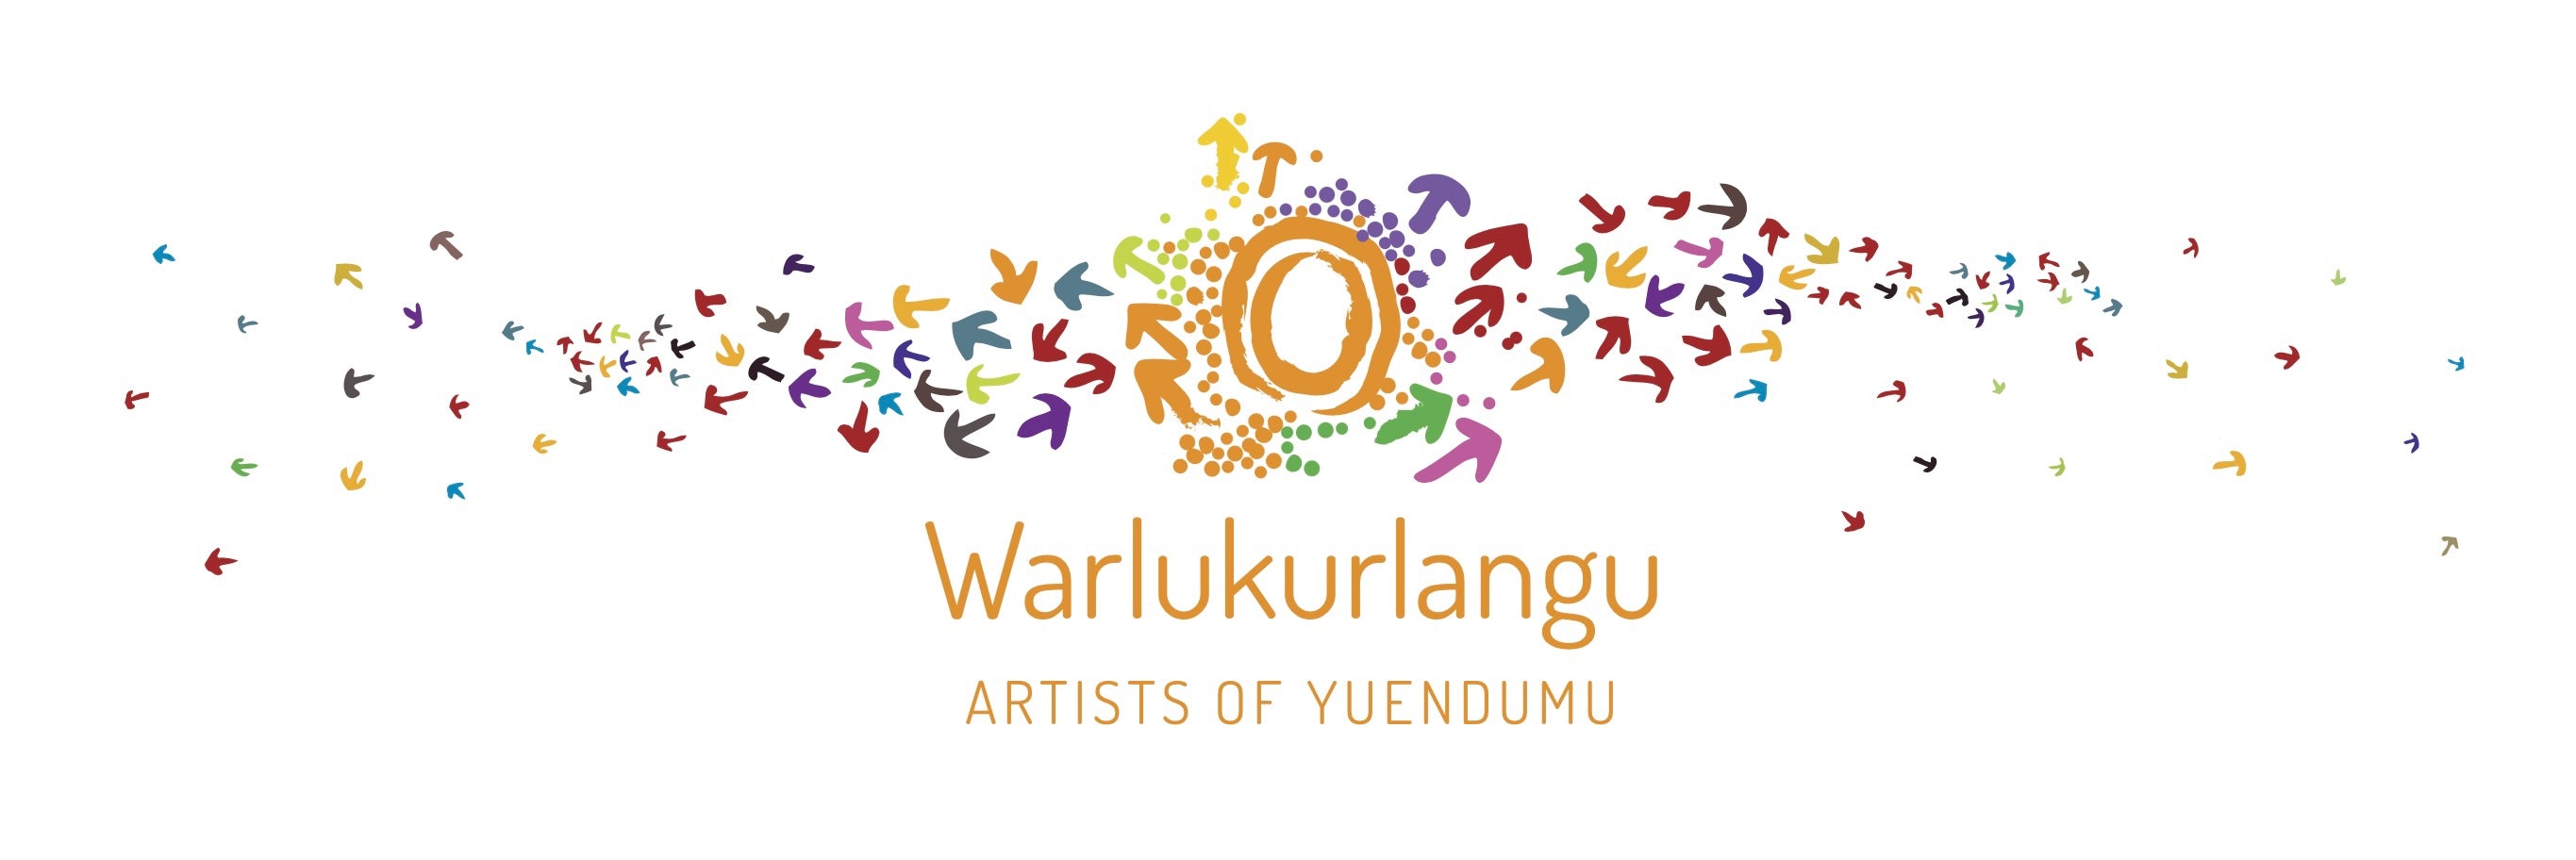 Warlukurlangu - The Artists of Yuendumu